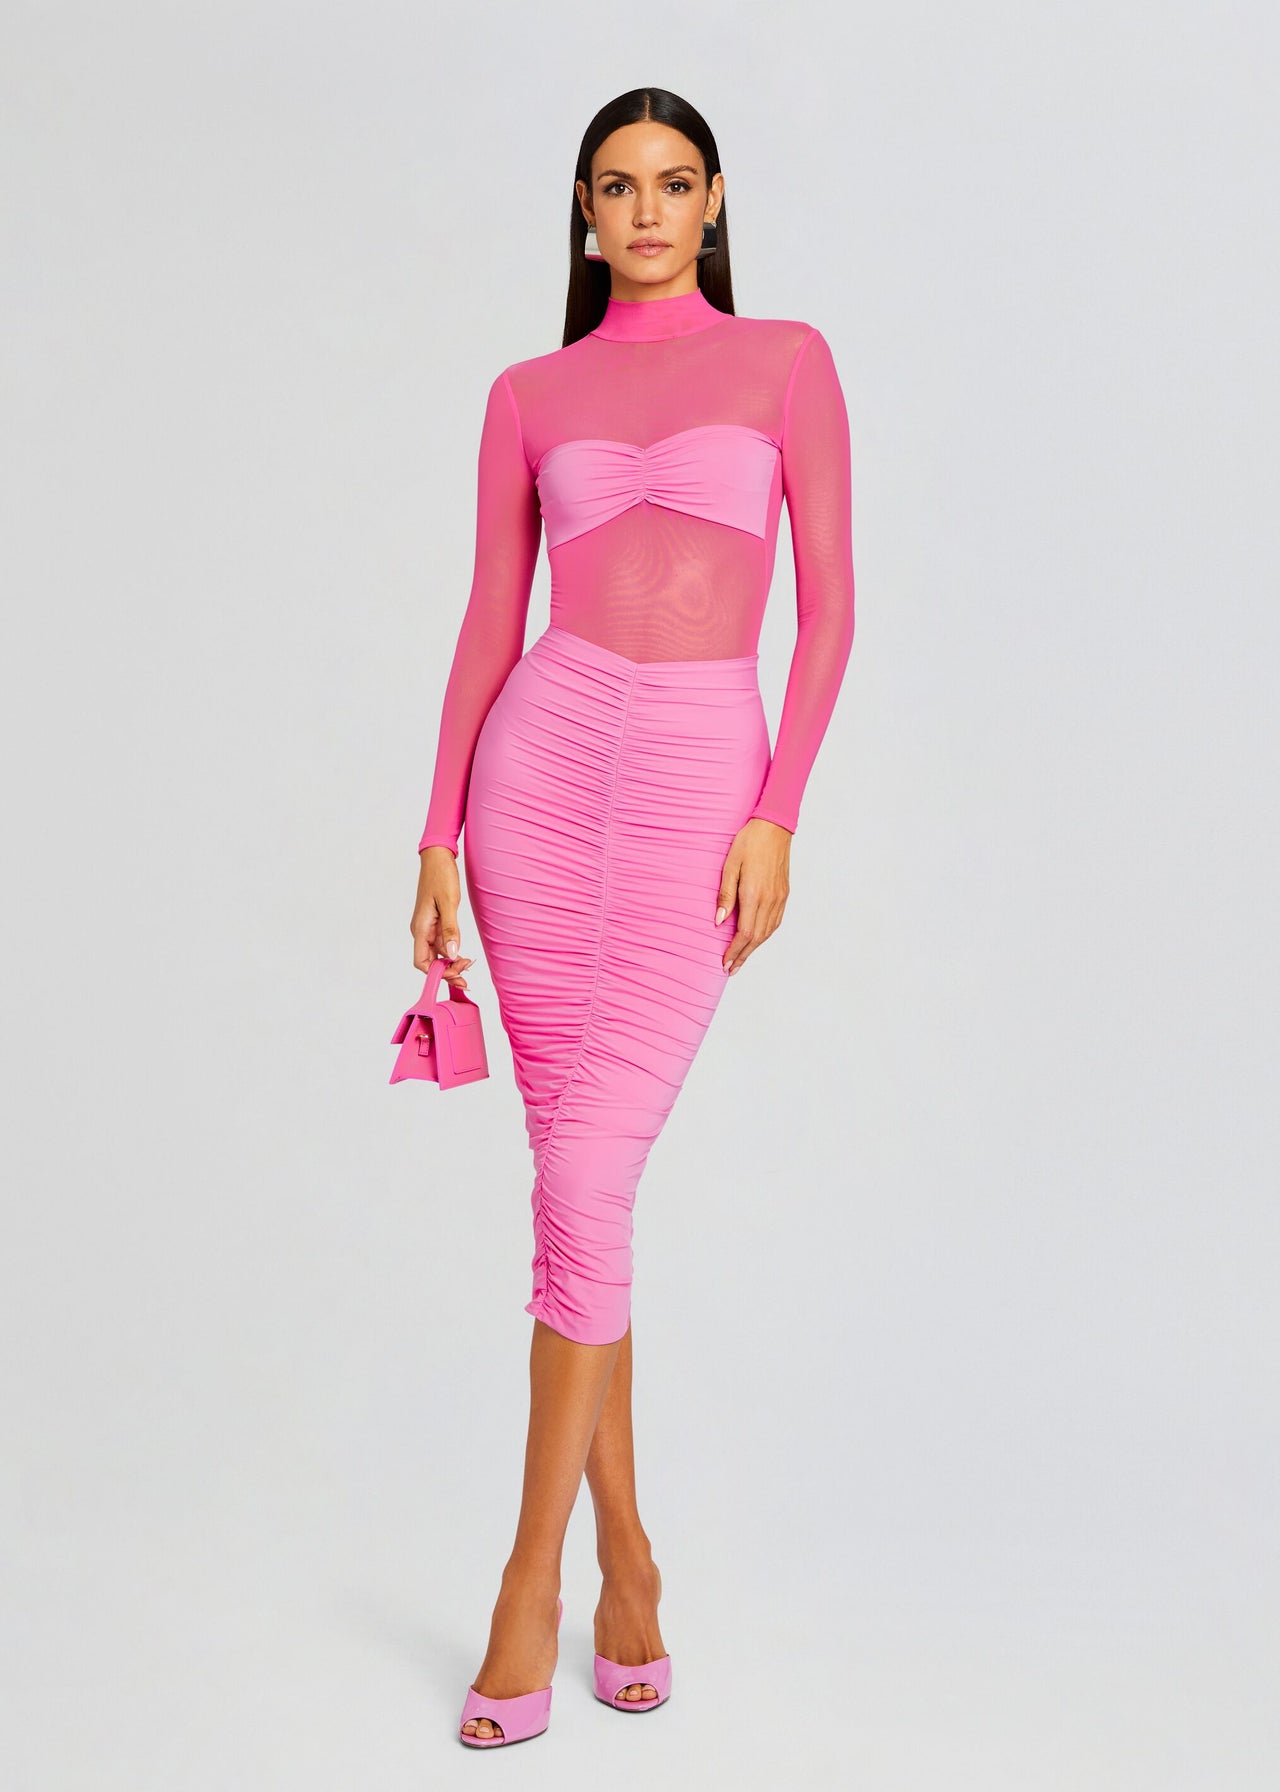 Revive Designer Resale & Boutique - Pink Top- $22, Size: L Apana